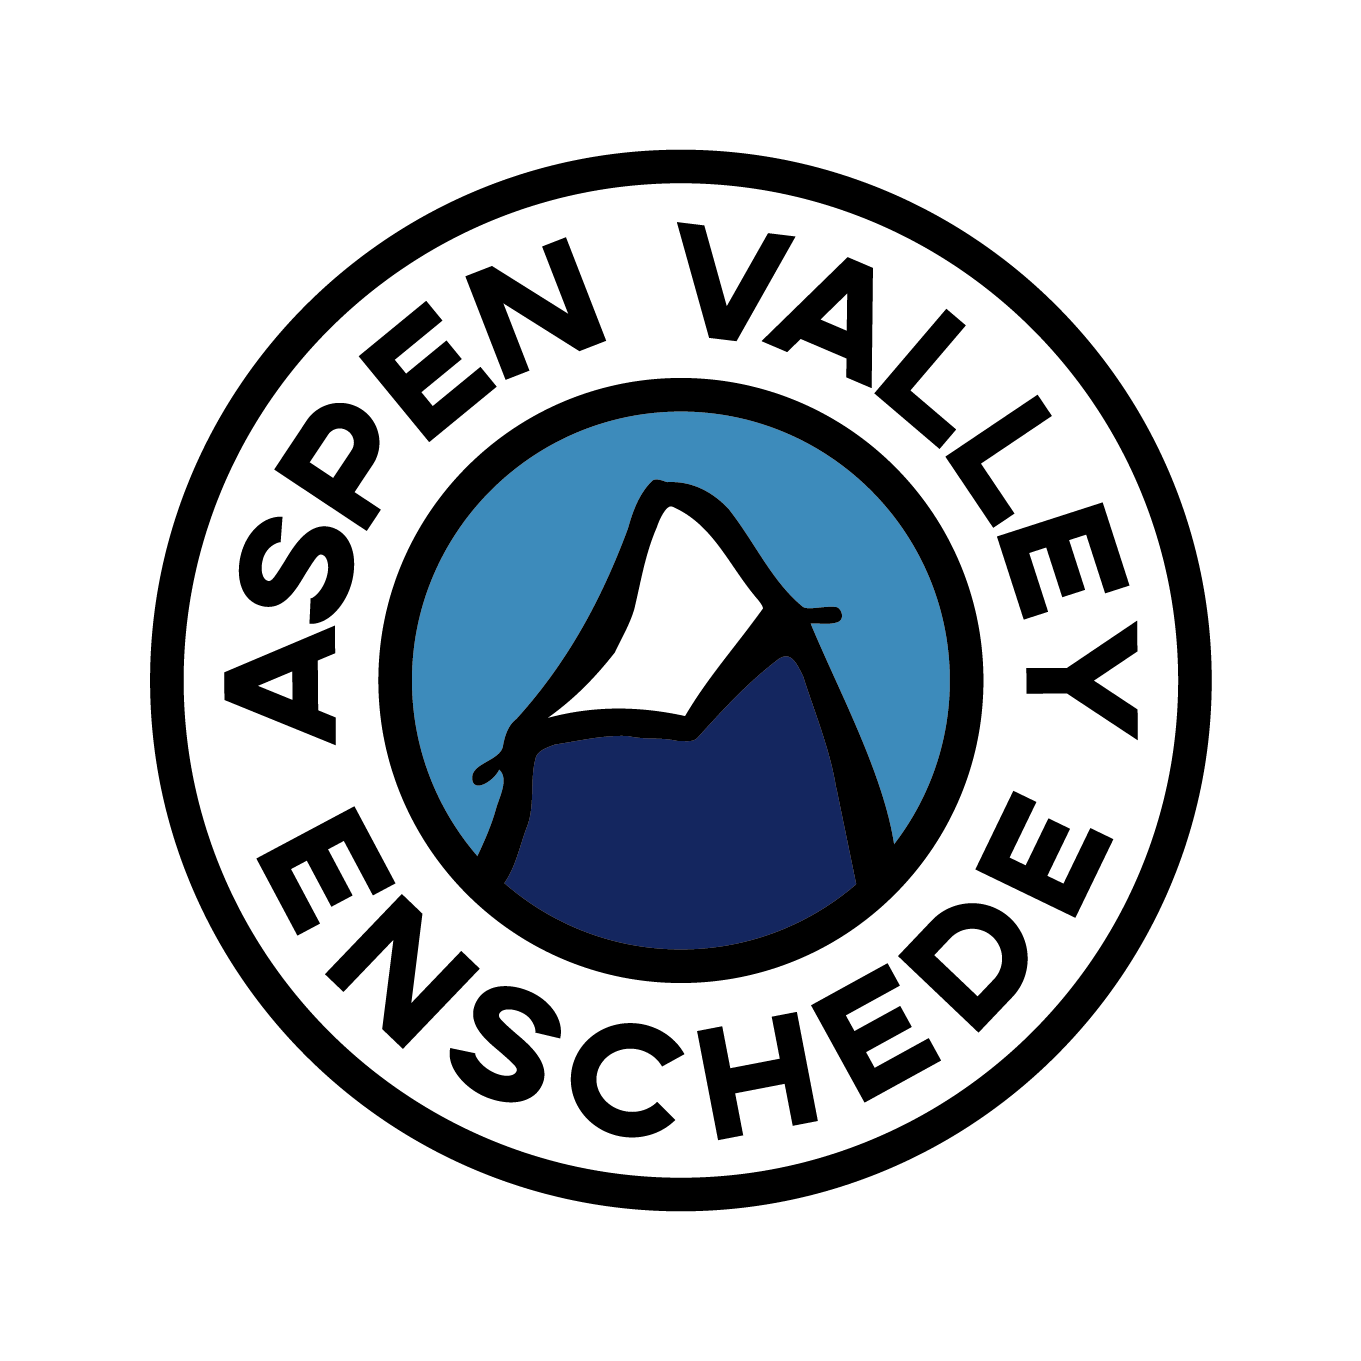 Aspen Valley Enschede